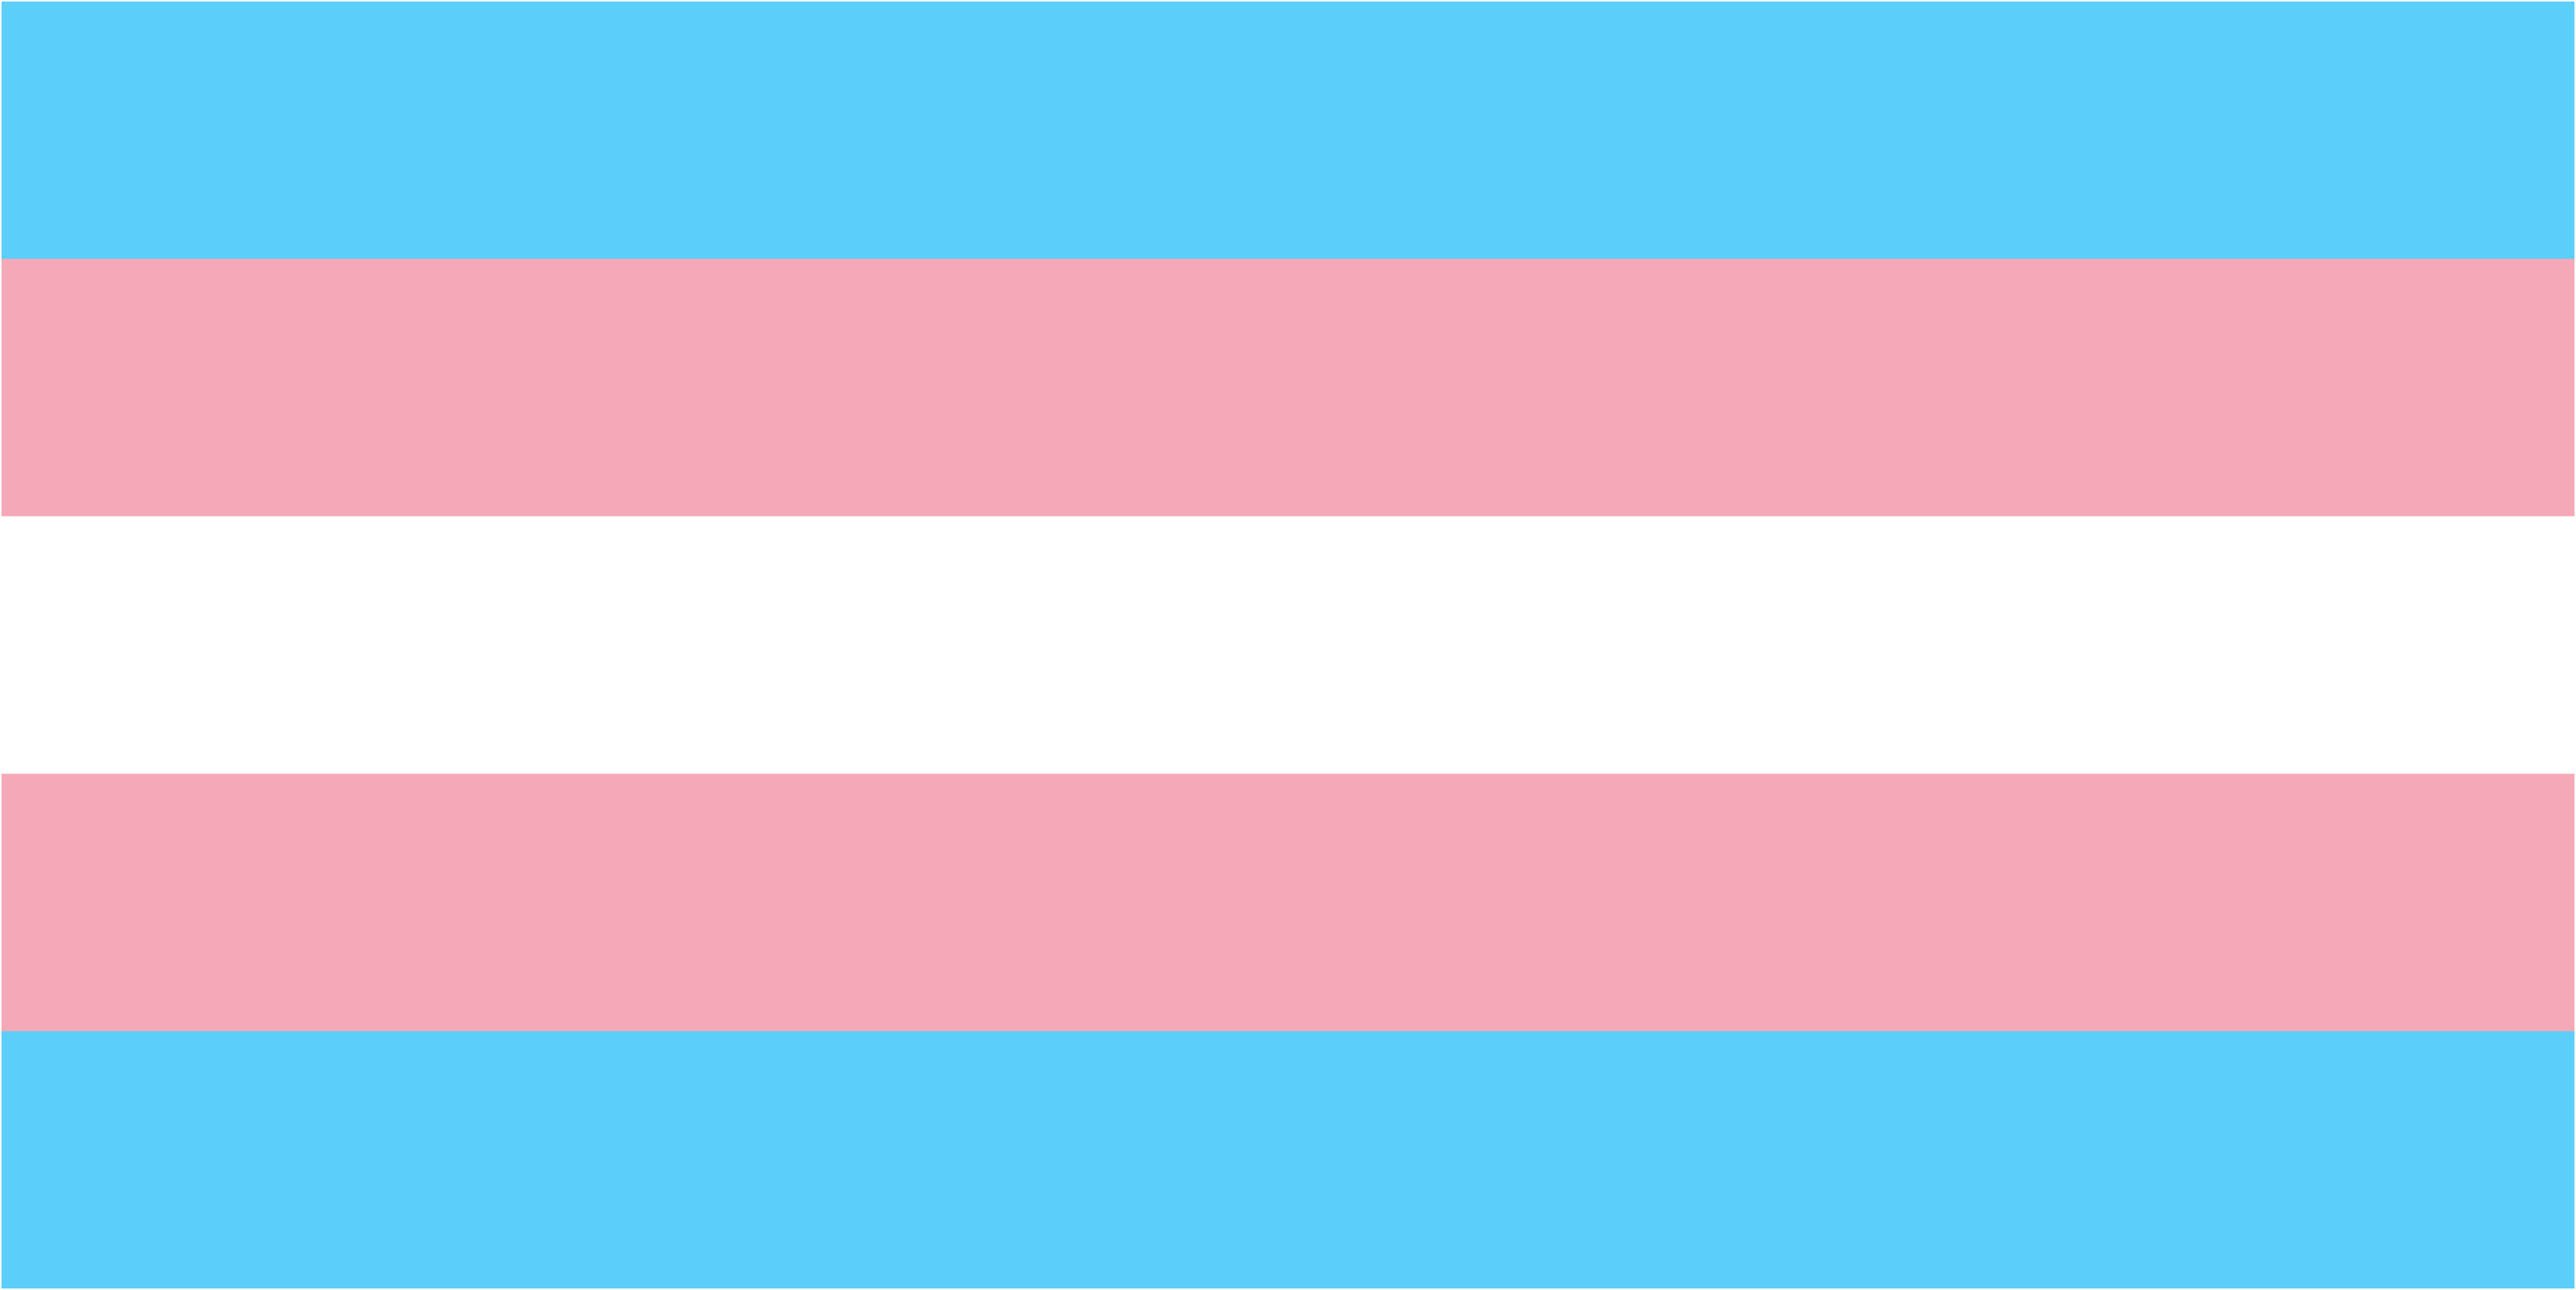 Trans Day of Visibility March Transgender Pride flag 2